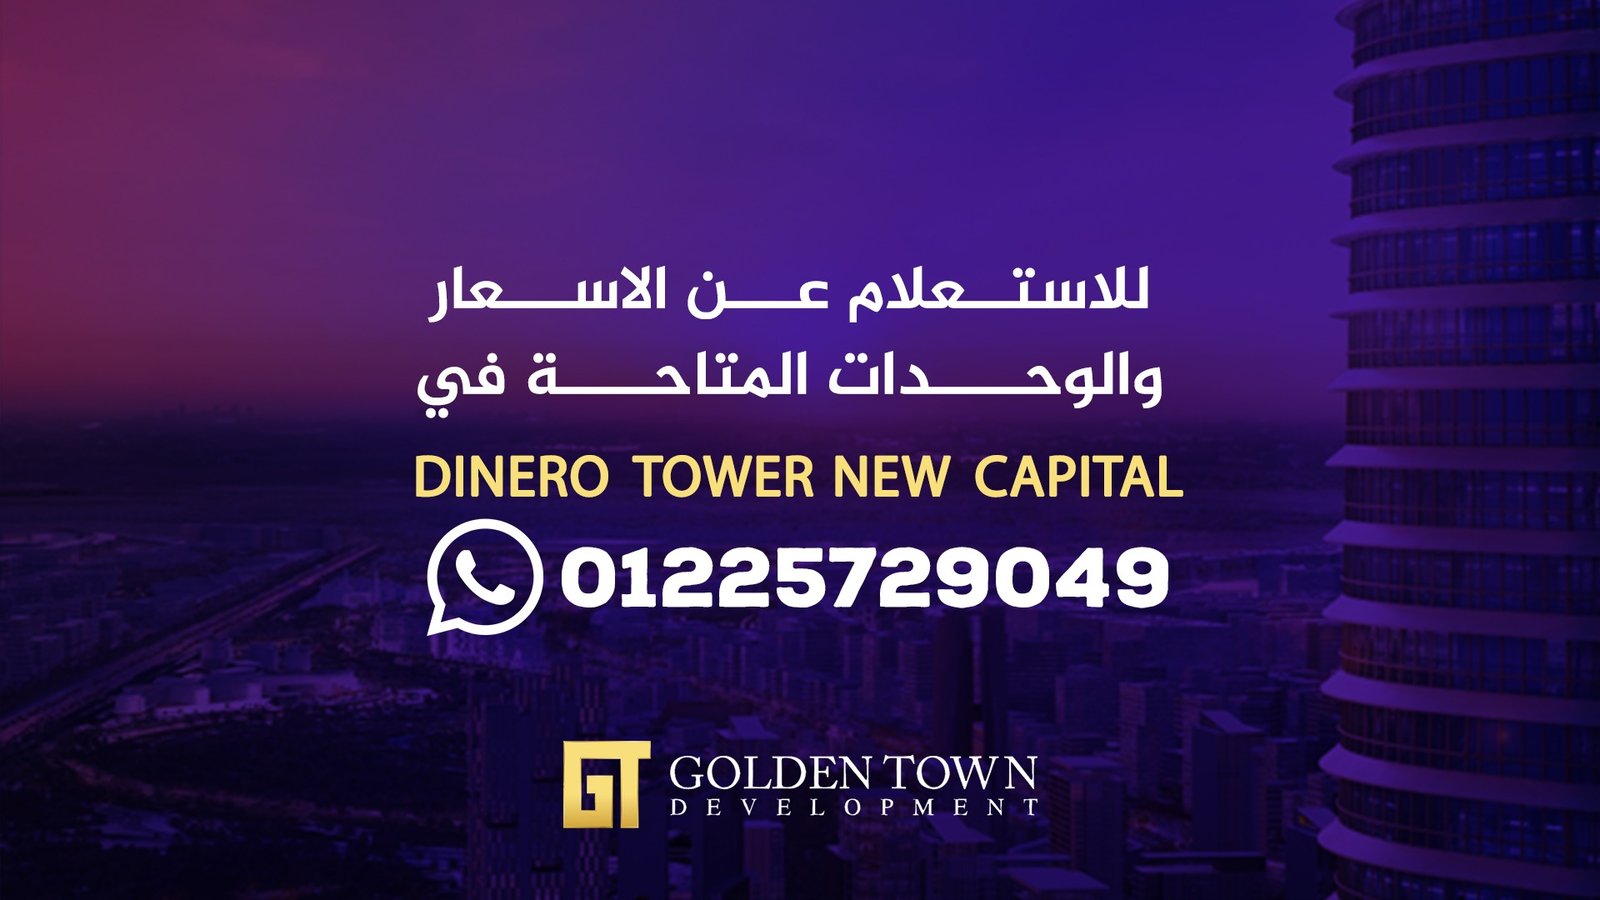 Golden Town Development Dinero Tower New Capital